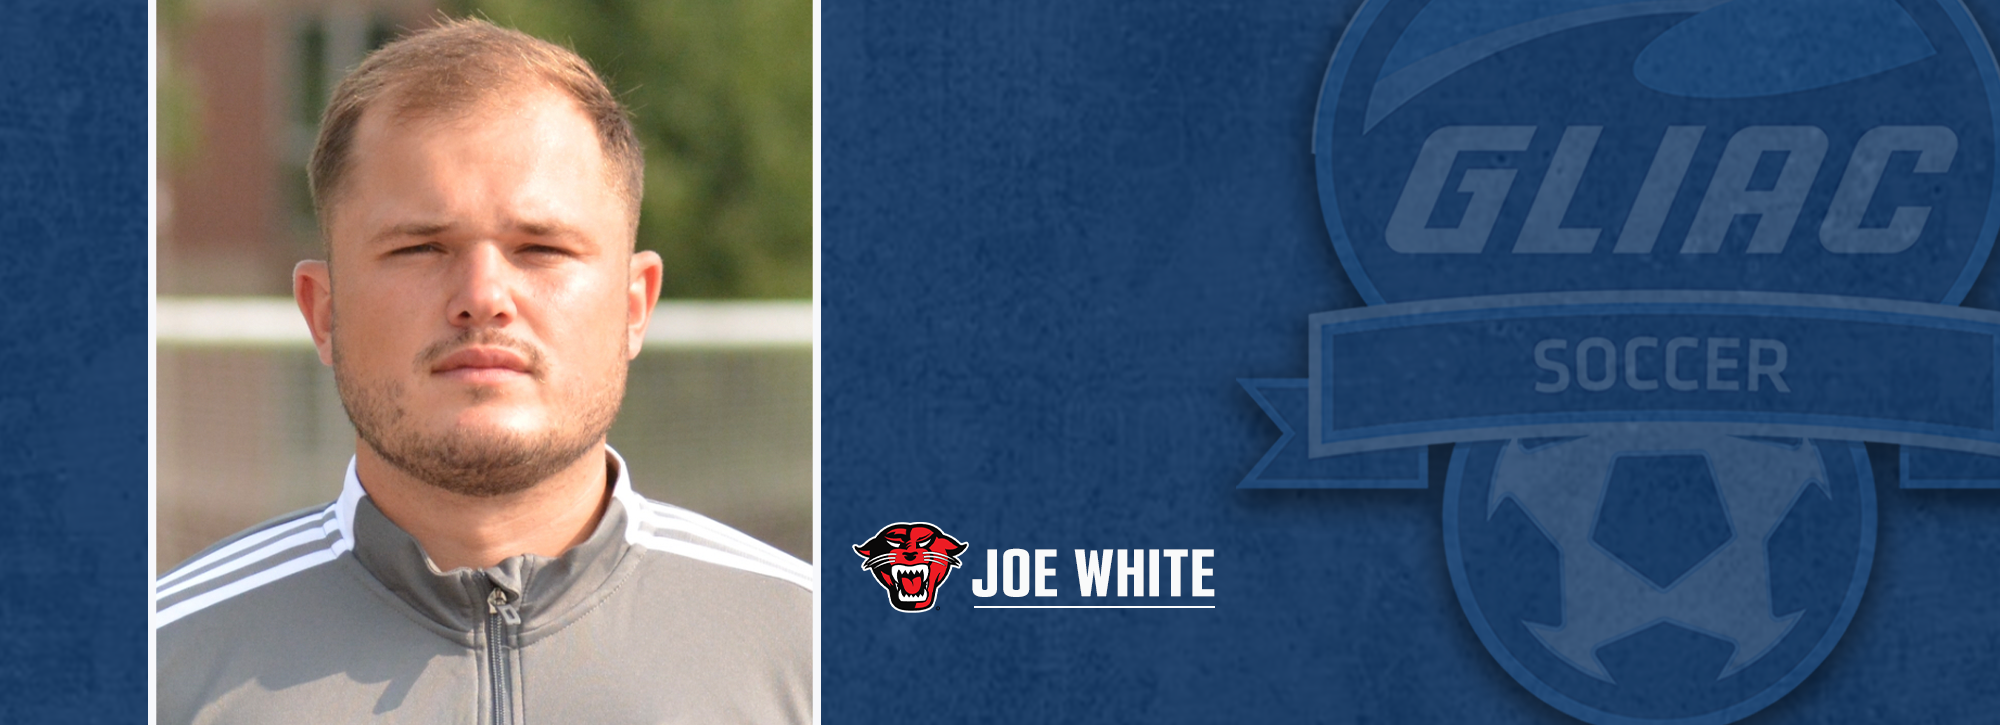 Davenport University hires Joe White as women’s soccer head coach